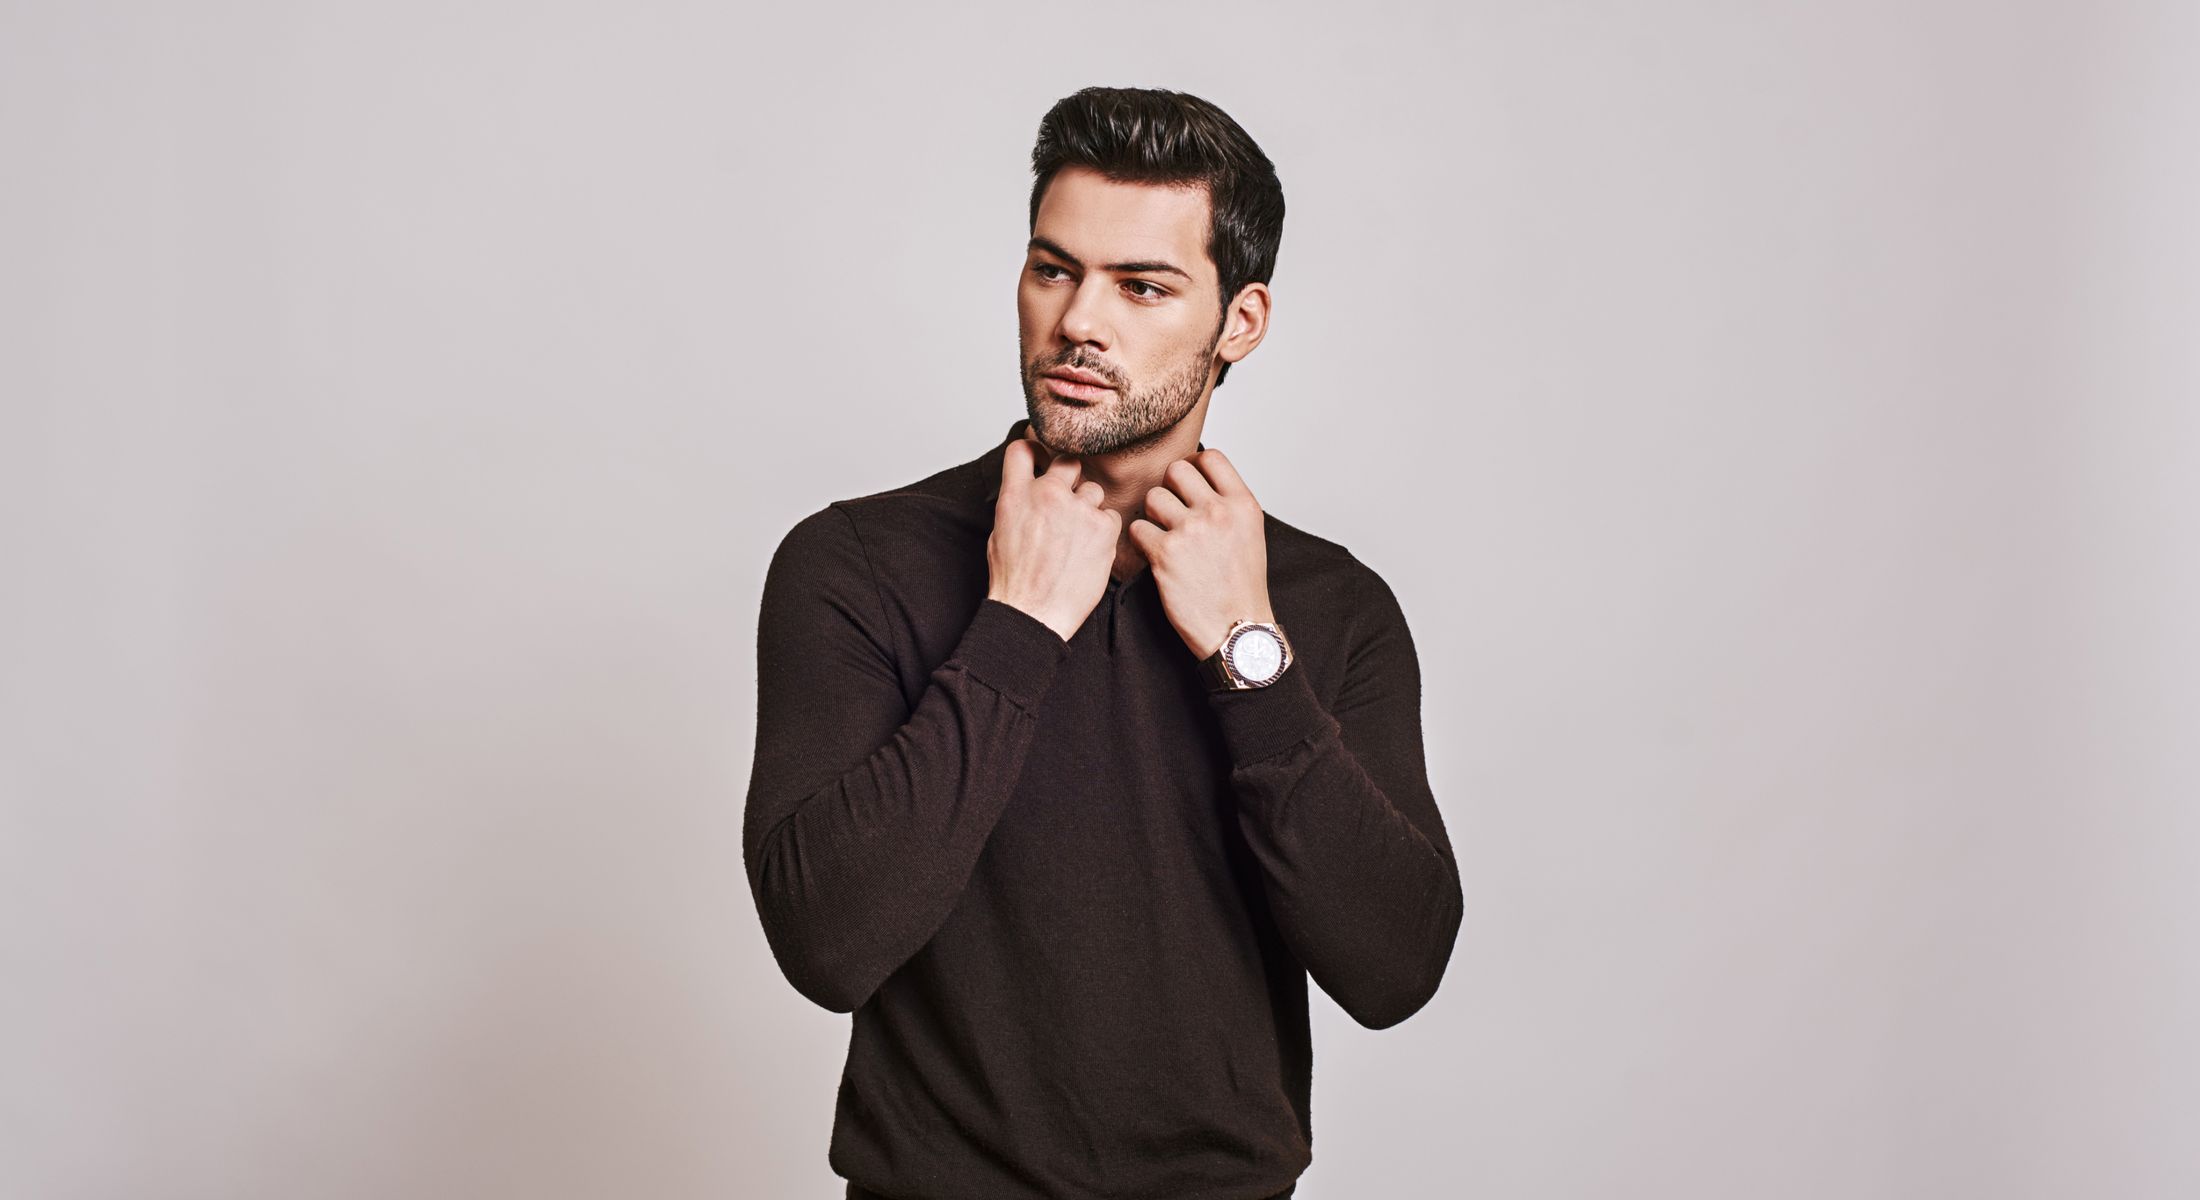 Laser Hair Removal for Men model in black sweater